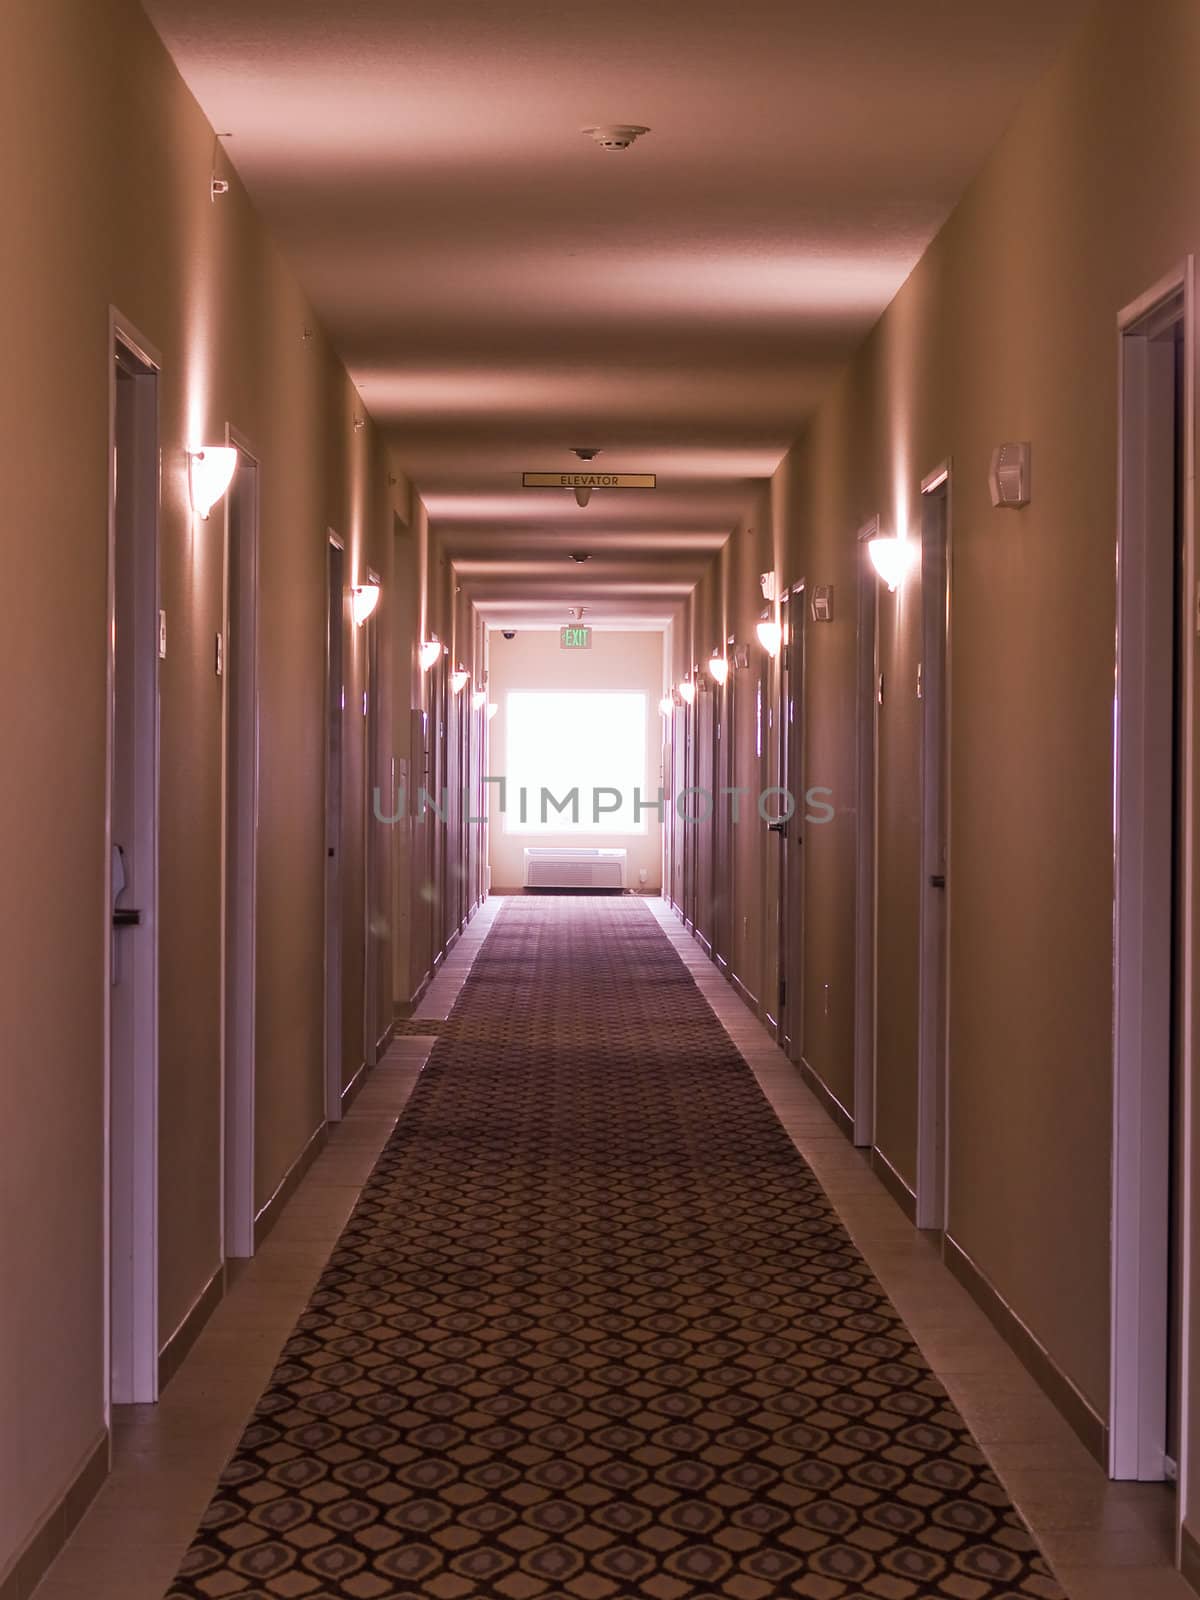 Empty hotel corridor in monochrome pink color tone by Frankljunior